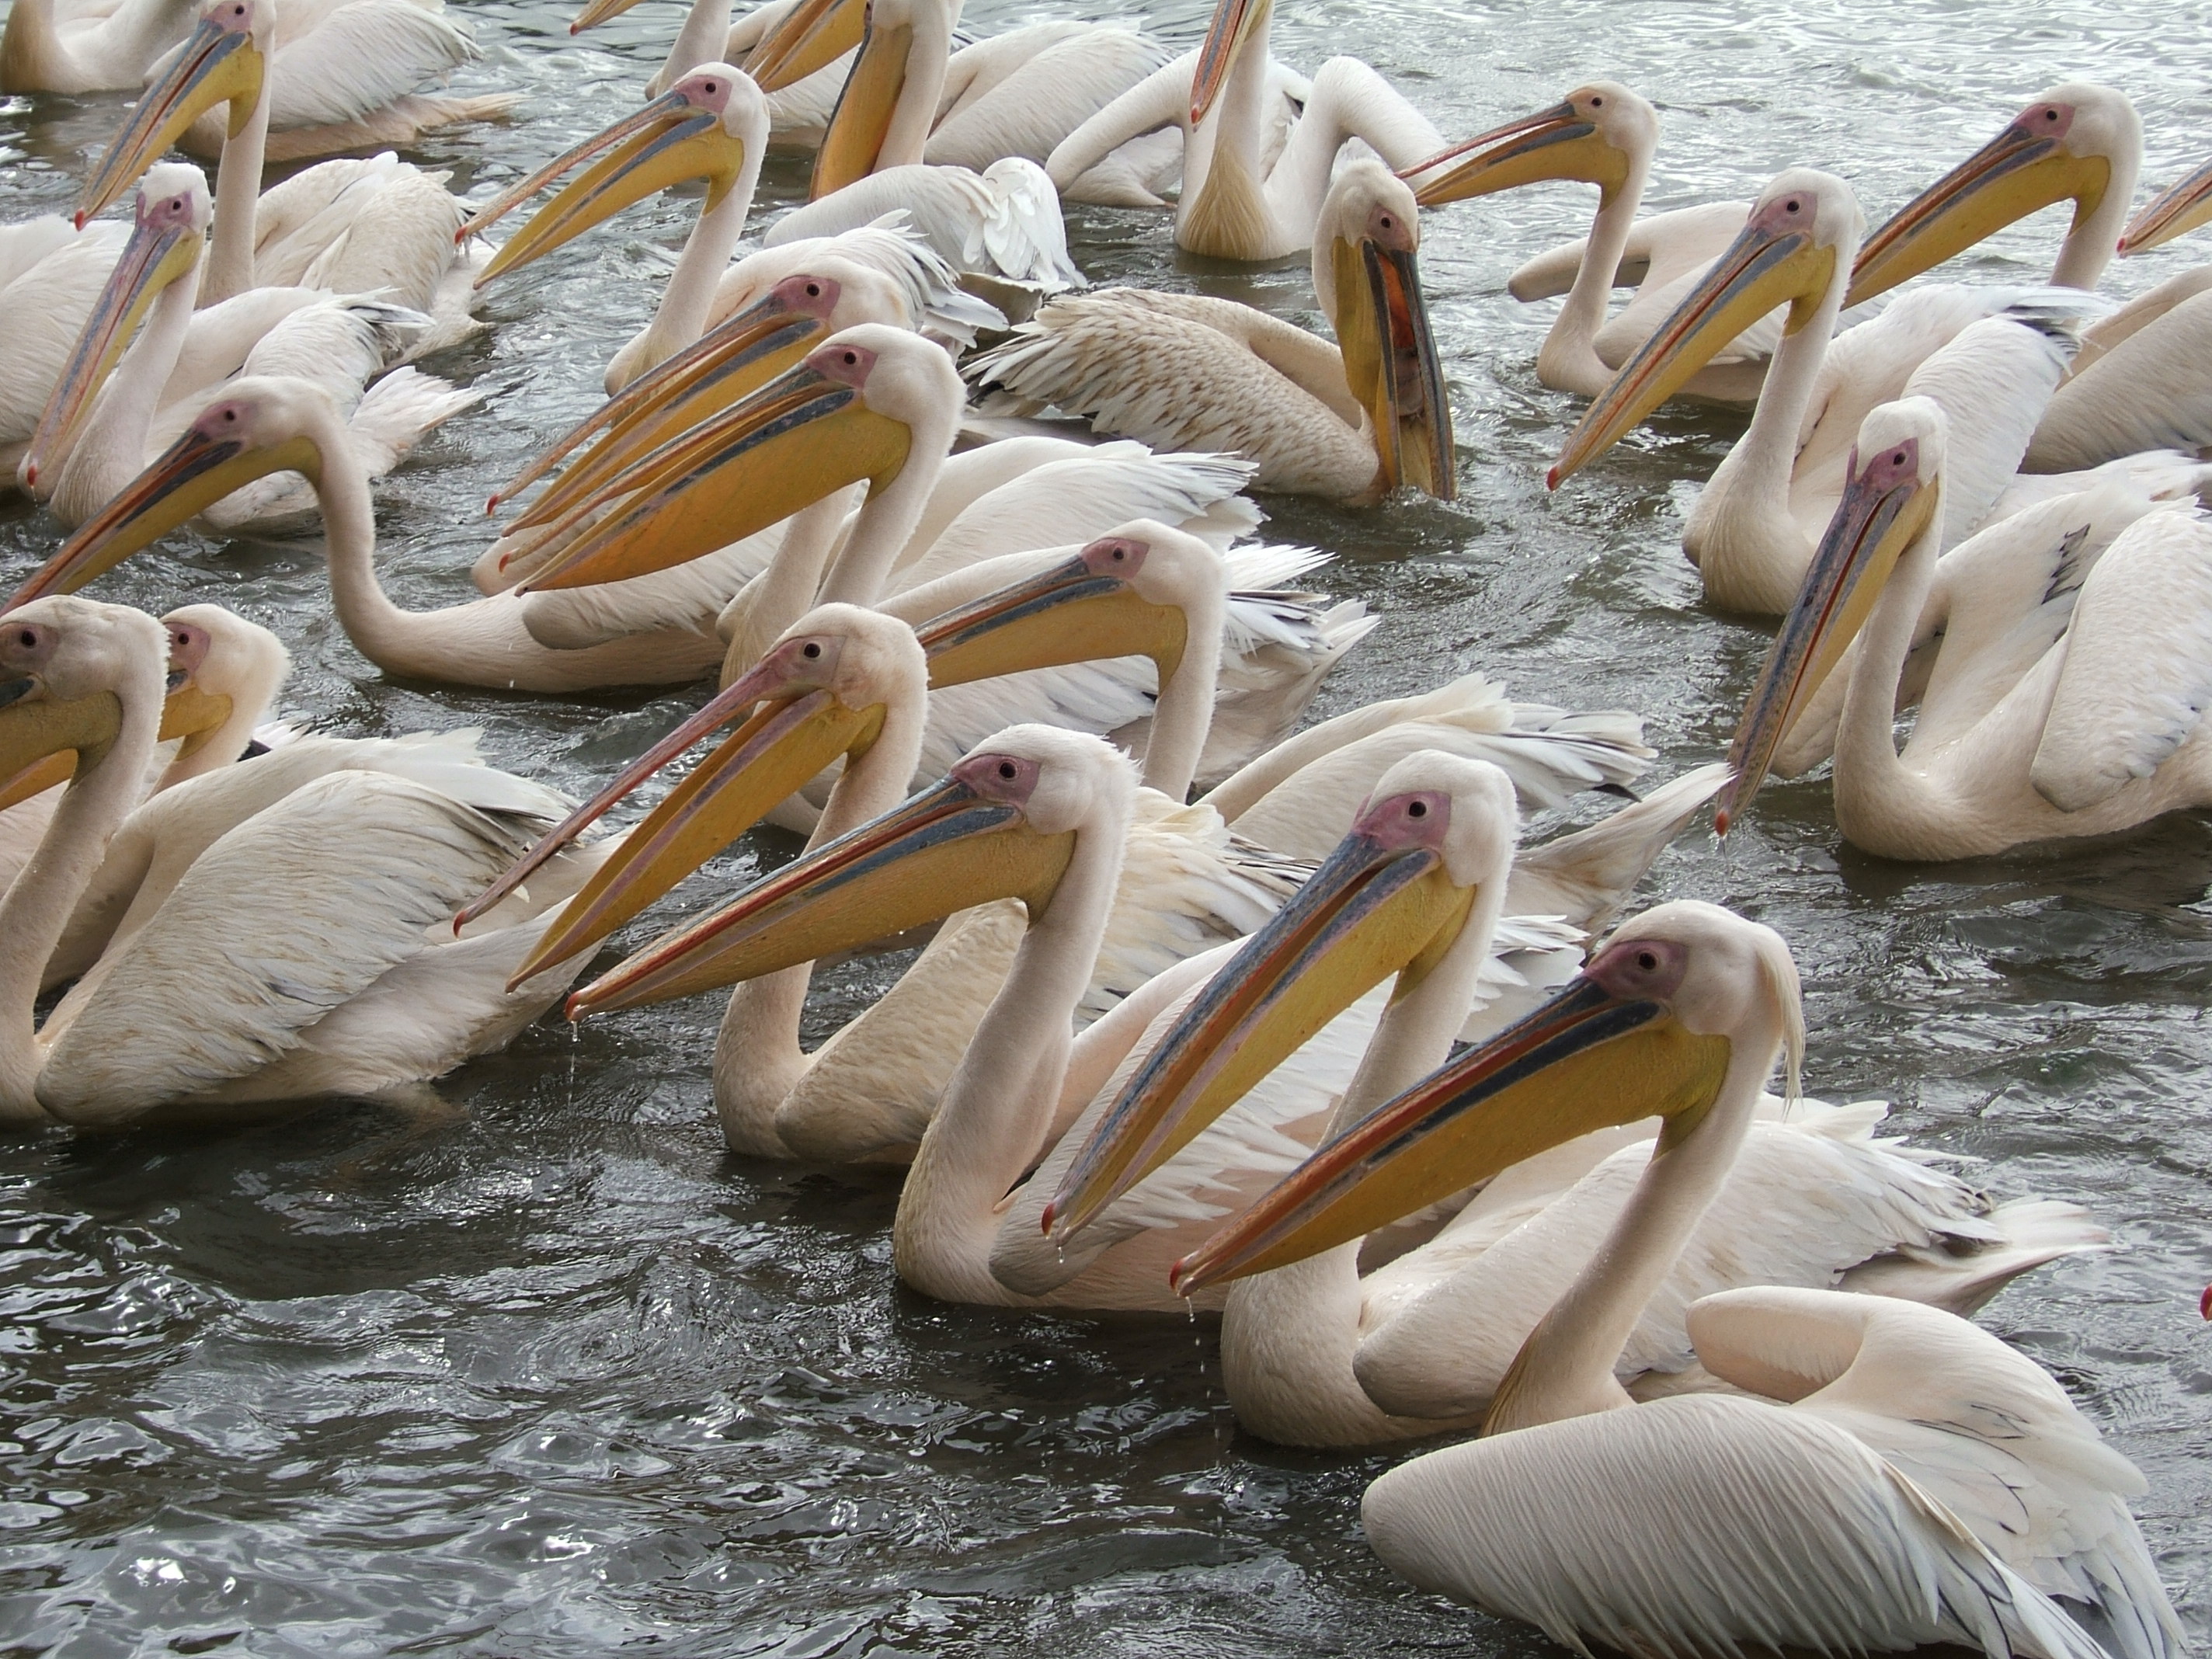 Pelicans on the lake Tana, Ethiopia